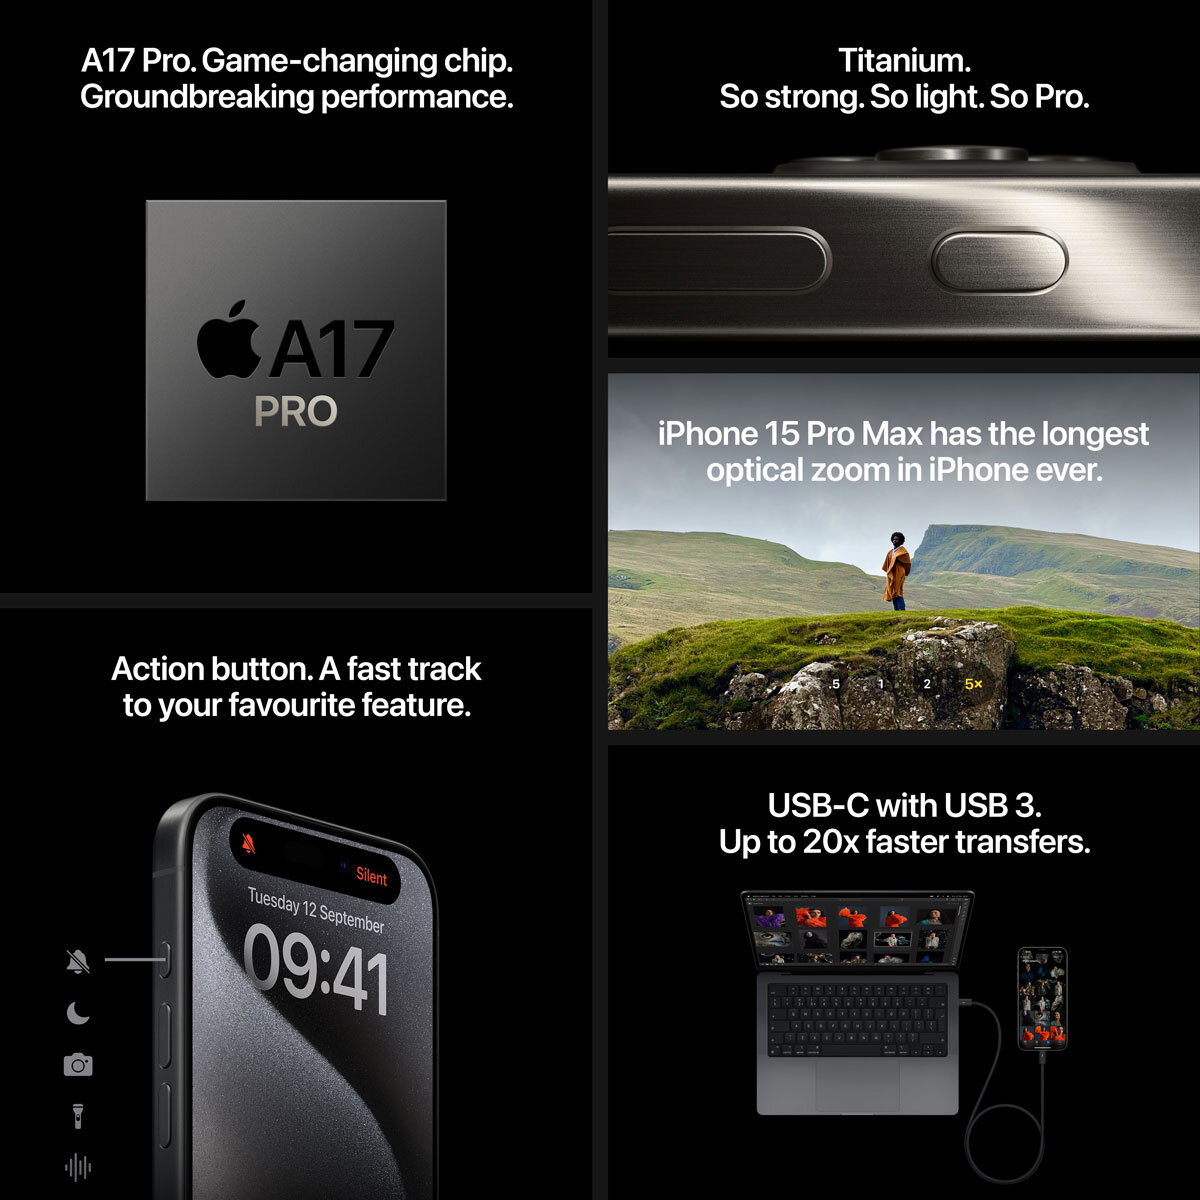 Buy Apple iPhone 15 Pro Max 512GB Sim Free Mobile Phone in Black Titanium MU7C3ZD/A at Costco.co.uk